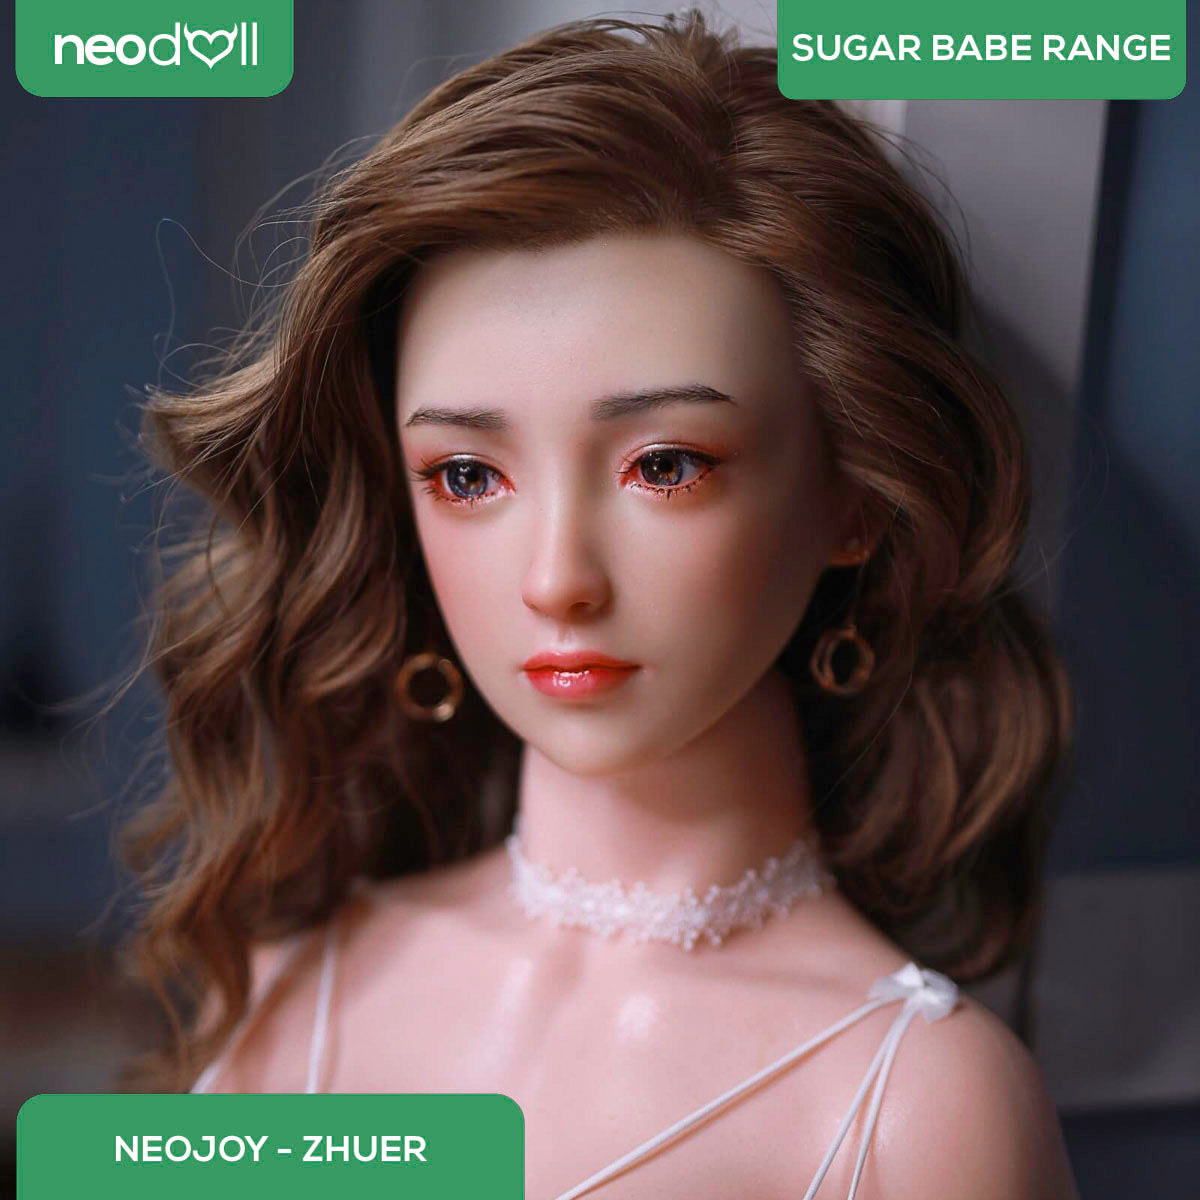 Neodoll Sugar Babe - Zhuer- Silicone TPE Hybrid Sex Doll - Gel Breast - Uterus - 157cm - Silicone Colour